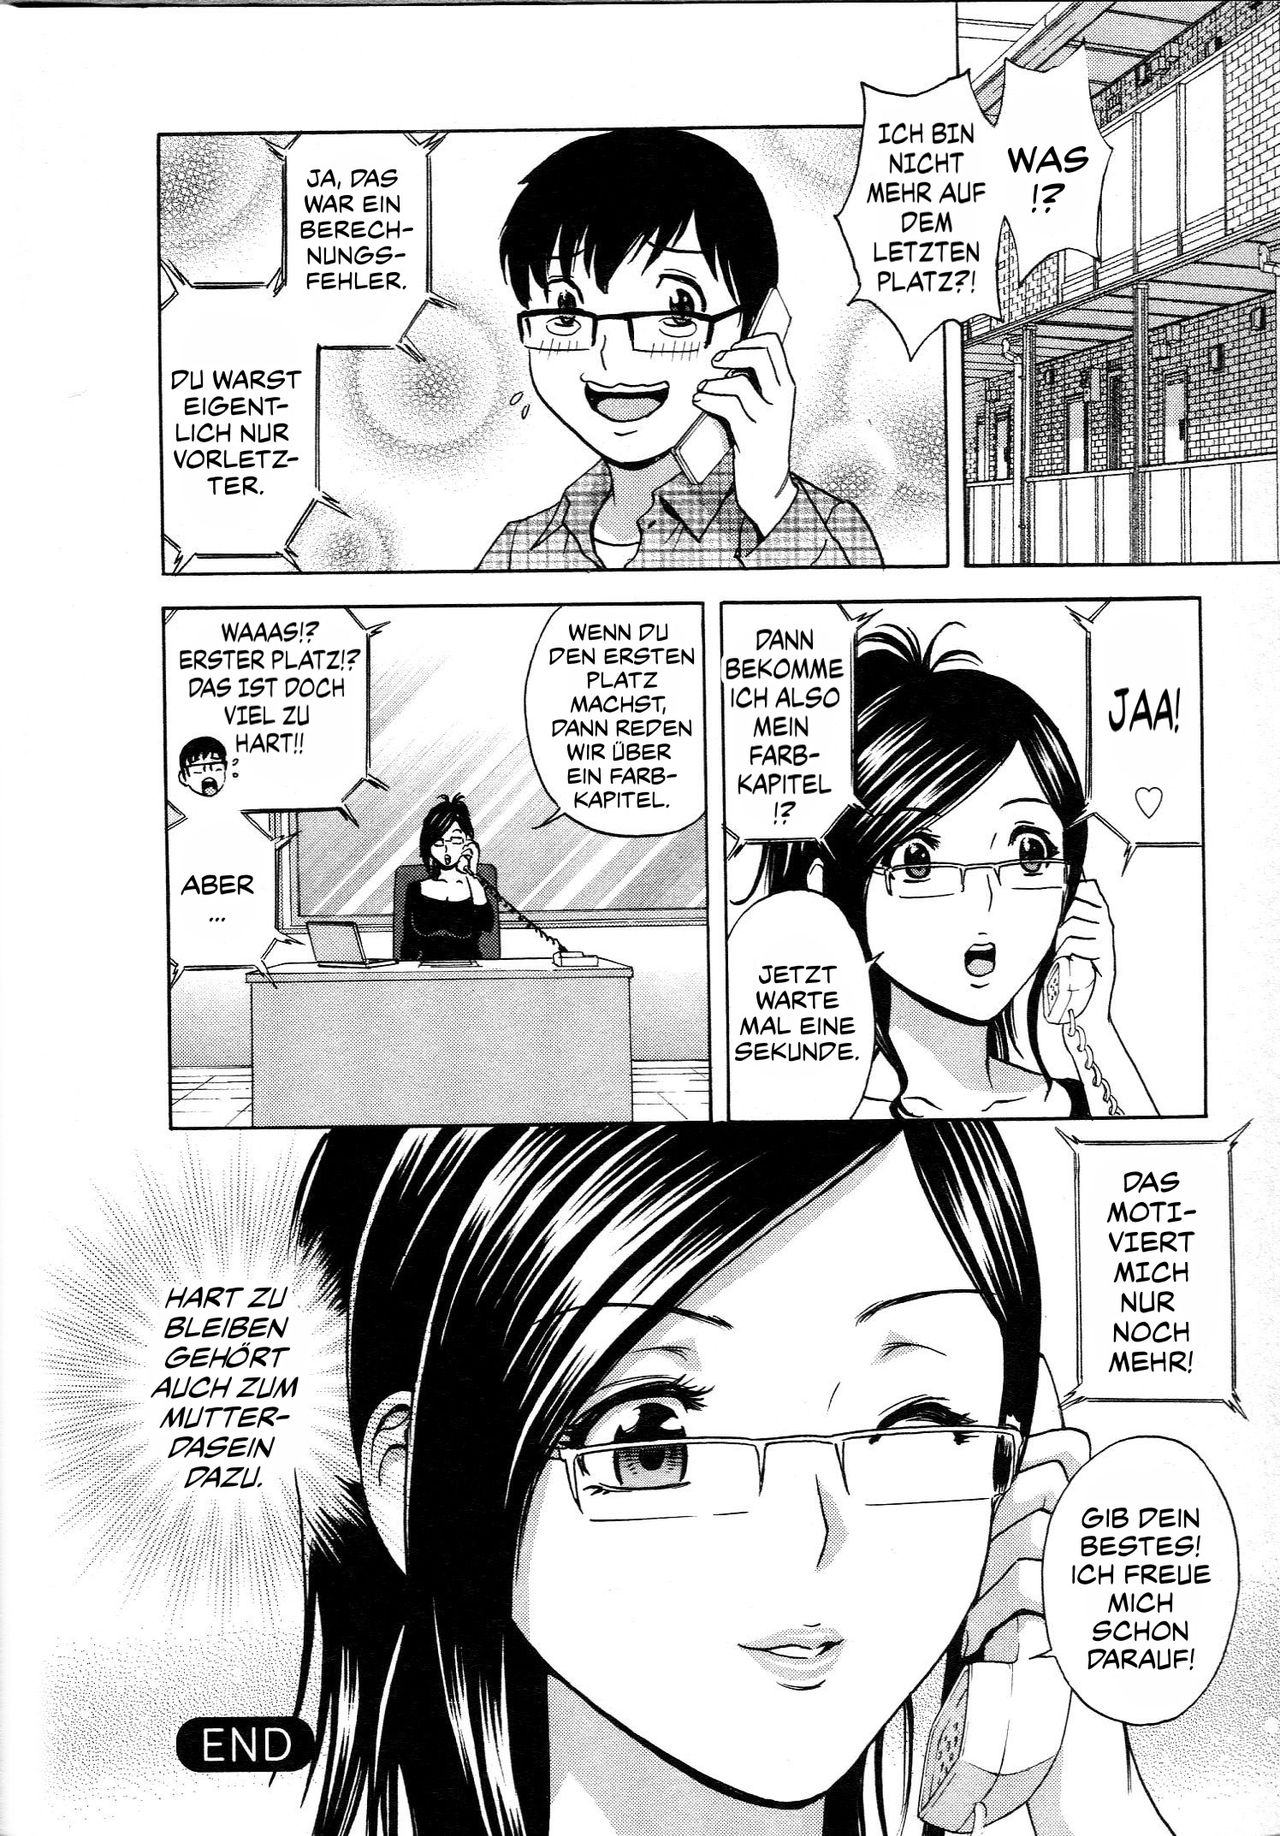 [Hidemaru] Eroina Hitoduma - Manga no youna Hitozuma to no Hibi 2 | Life with Married Women Just Like a Manga 2 [German] [SchmidtSST] 79